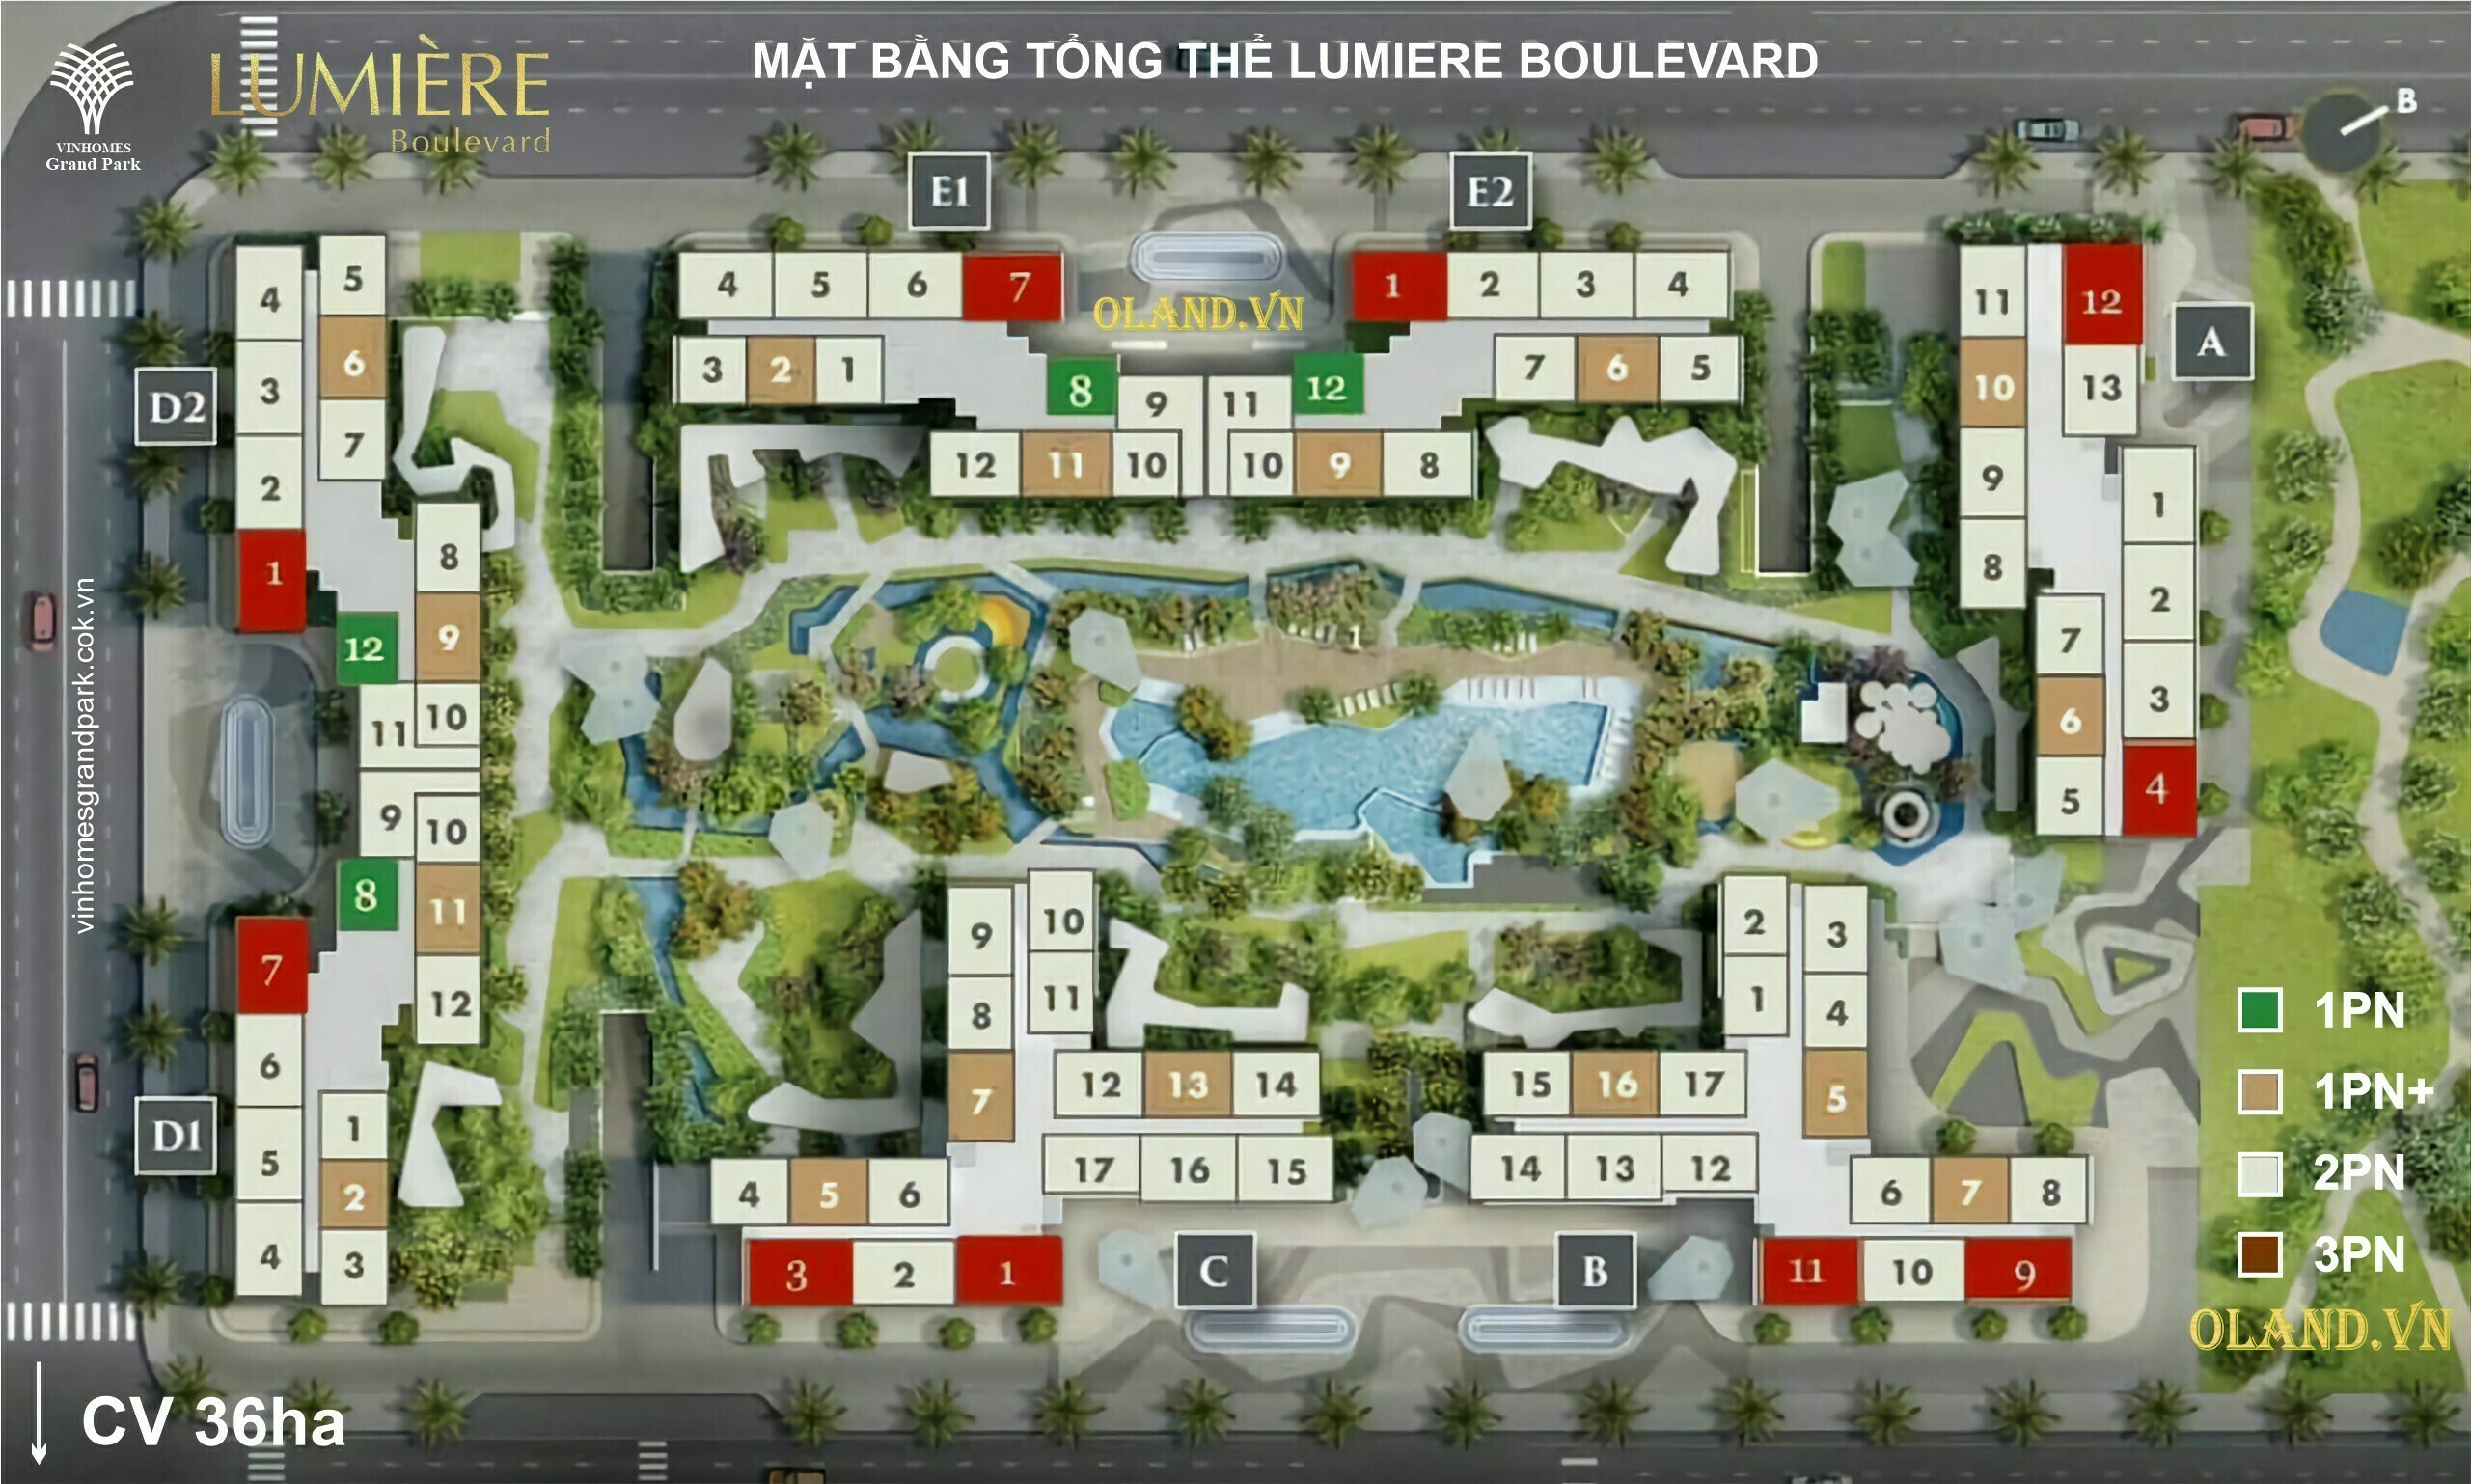 mặt bằng tổng thể (master layout) masteri lumiere boulevard - vinhomes grand park oland